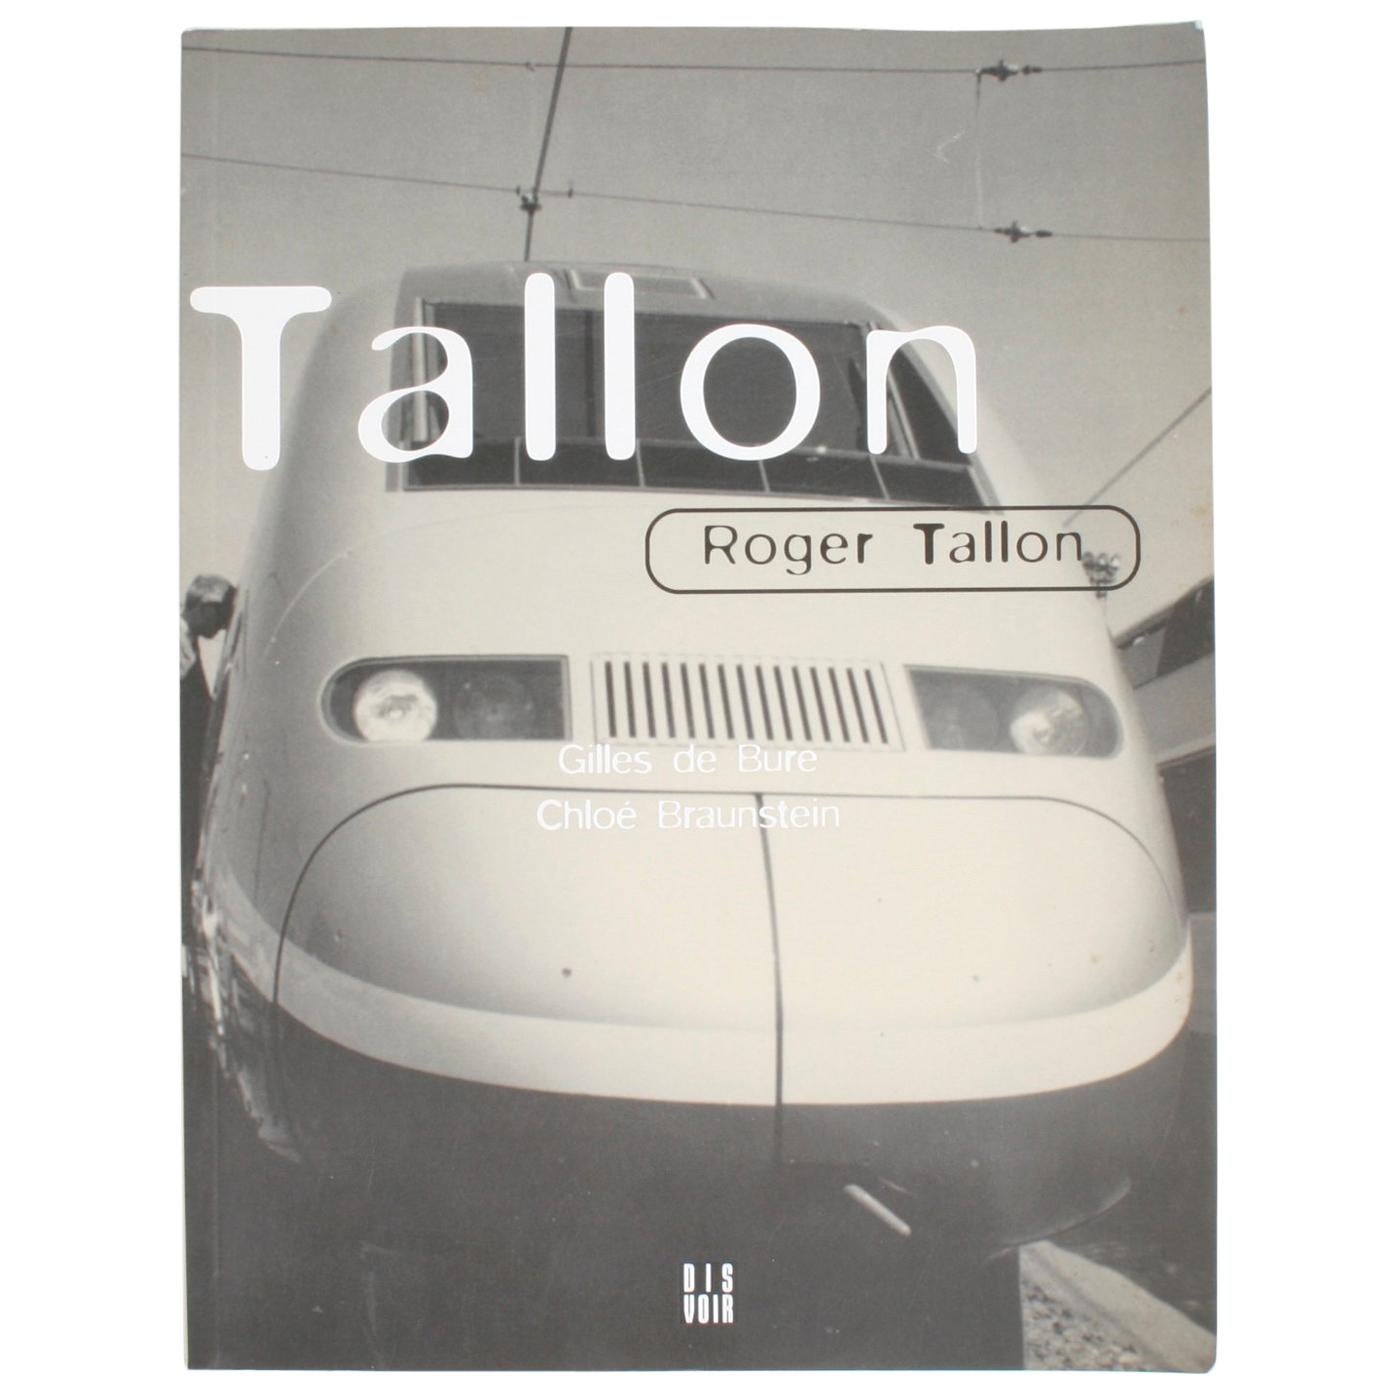 Roger Tallon by Roger Tallon, Chloe Braunstein, and Gilles de Bure